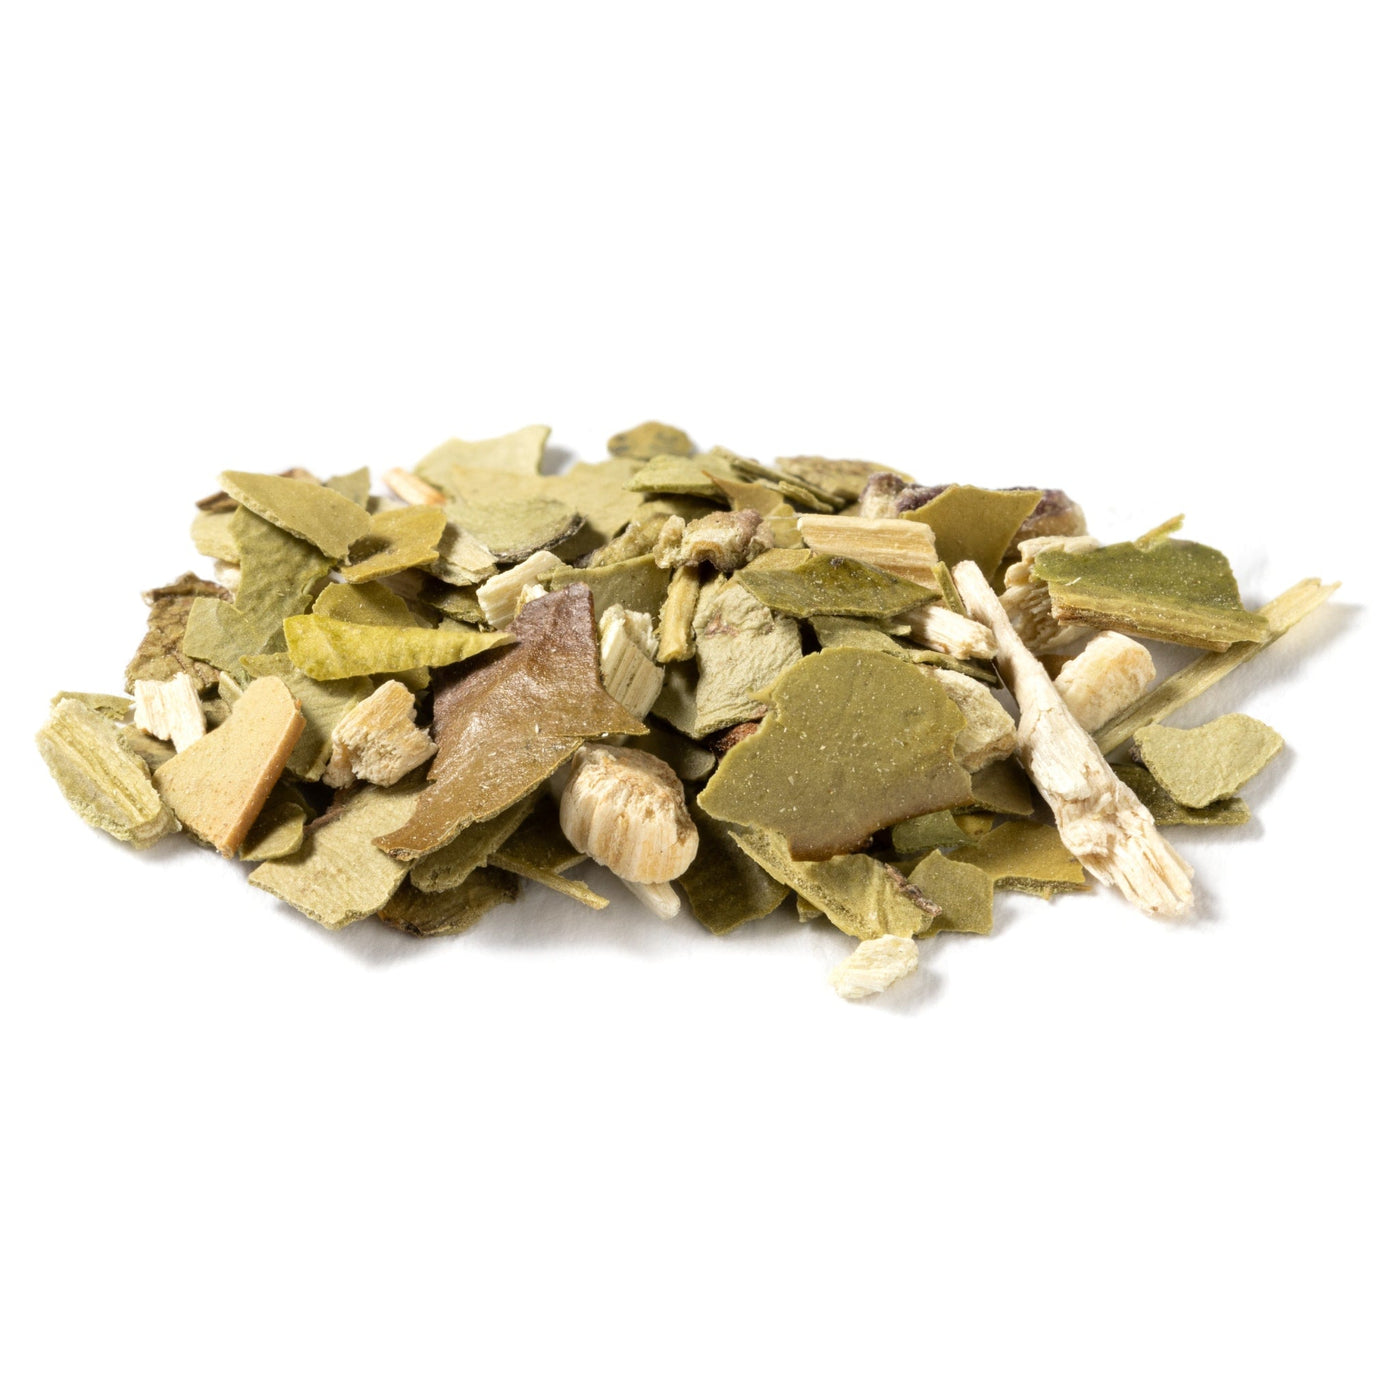 Mate Green 100g - Premium Loose Leaf Tea